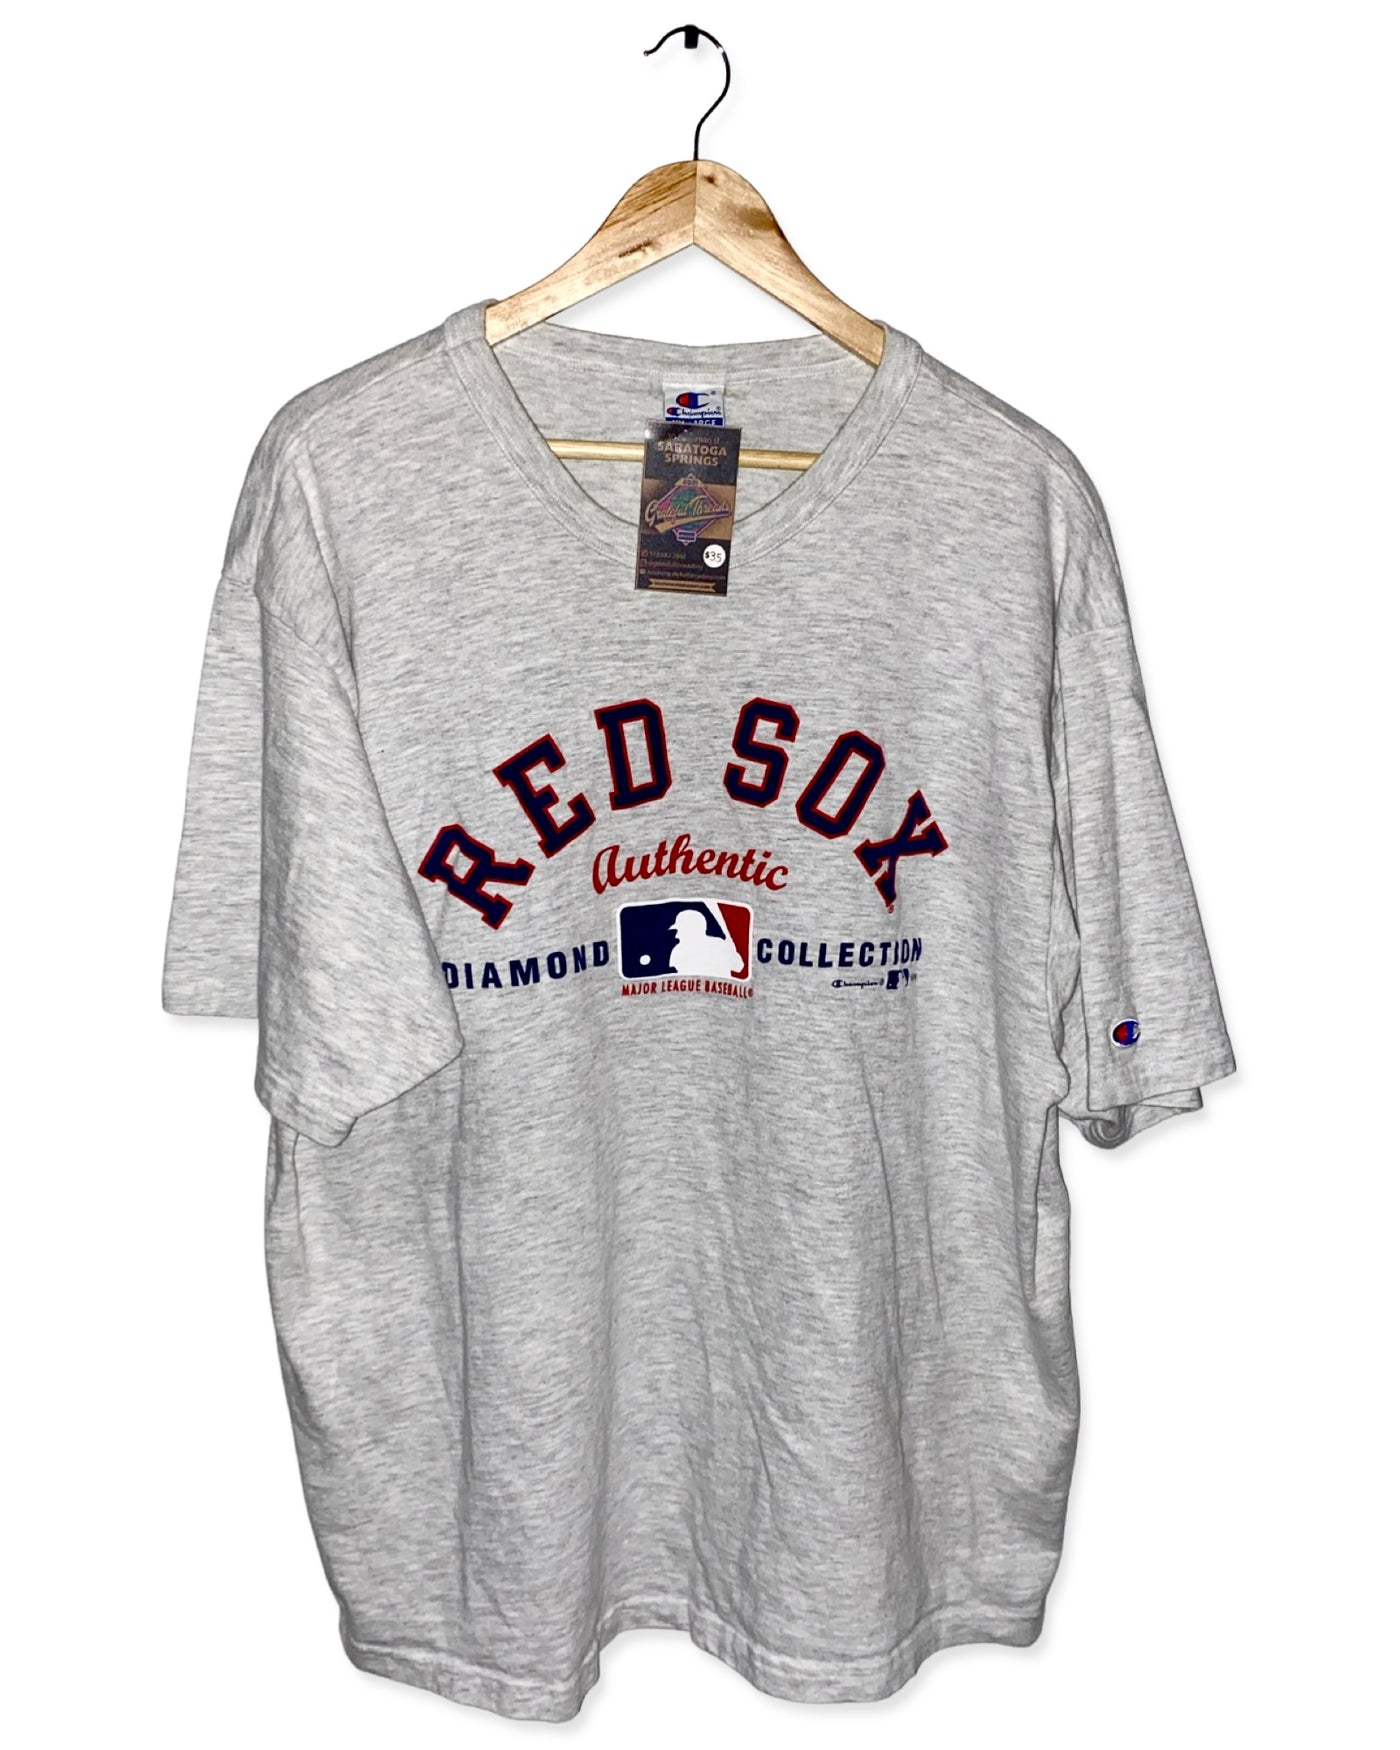 Vintage 1996 Red Sox Champion T-Shirt